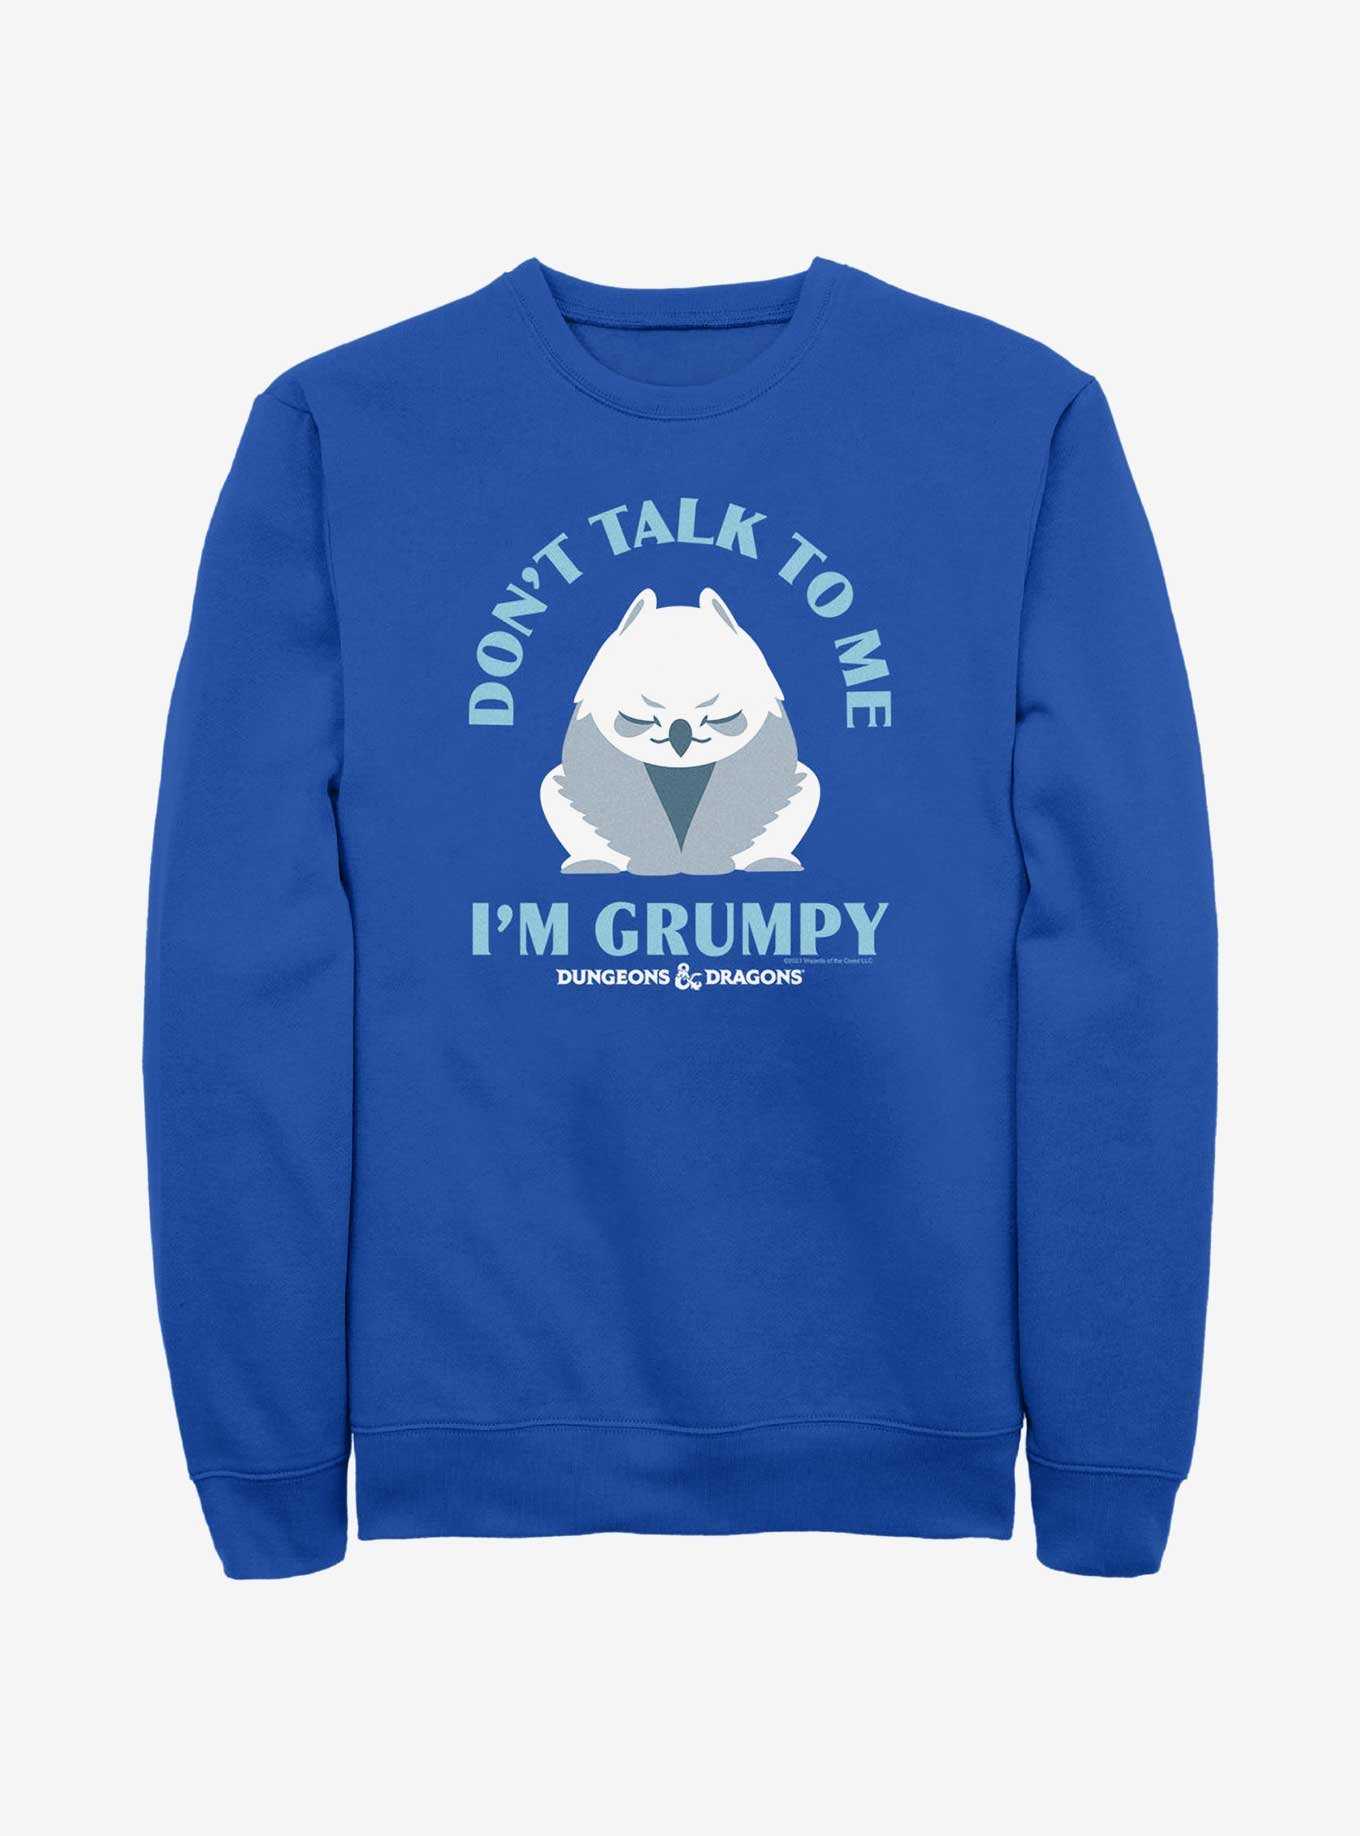 Dungeons & Dragons Grumpy Owlbear Sweatshirt, , hi-res